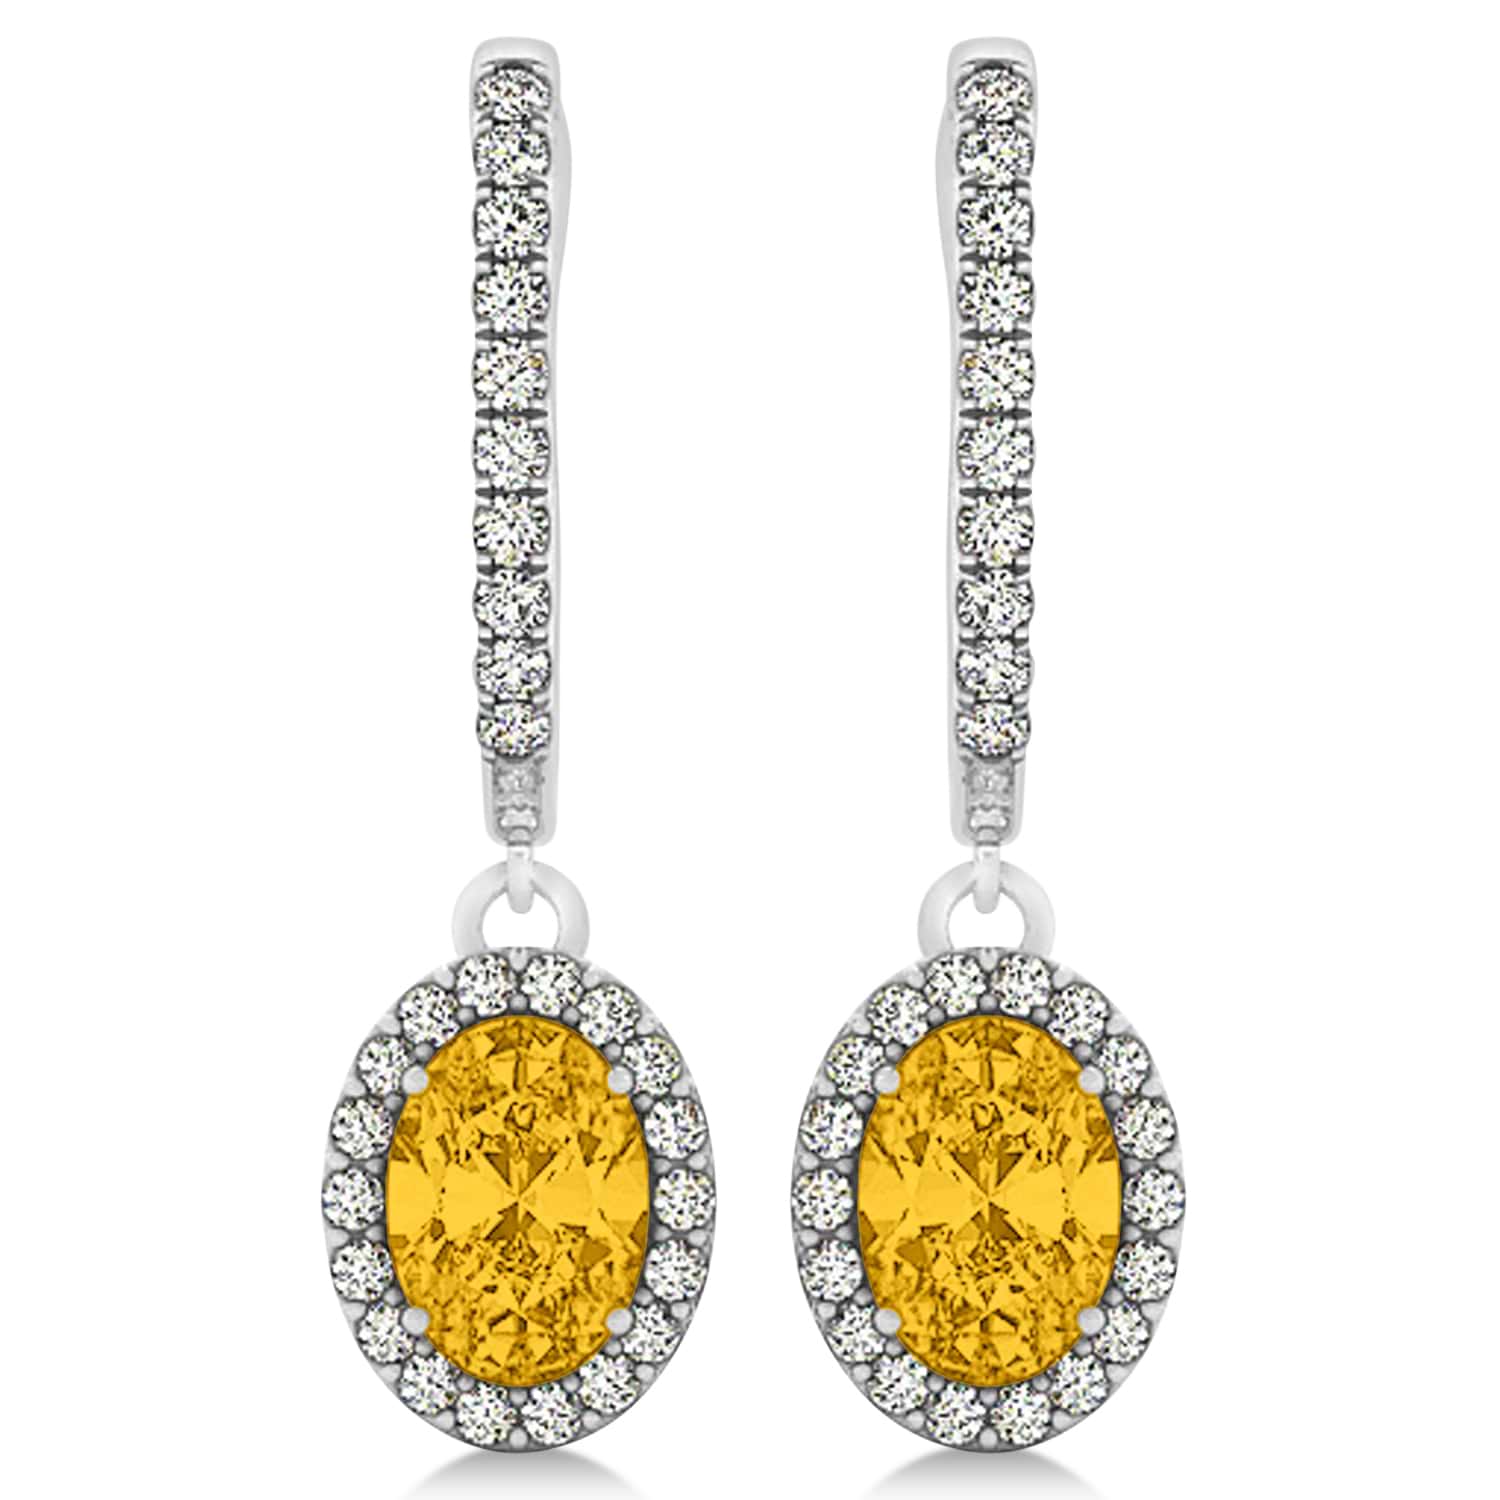 Oval Halo Diamond & Yellow Sapphire Drop Earrings in 14k White Gold 1.60ct